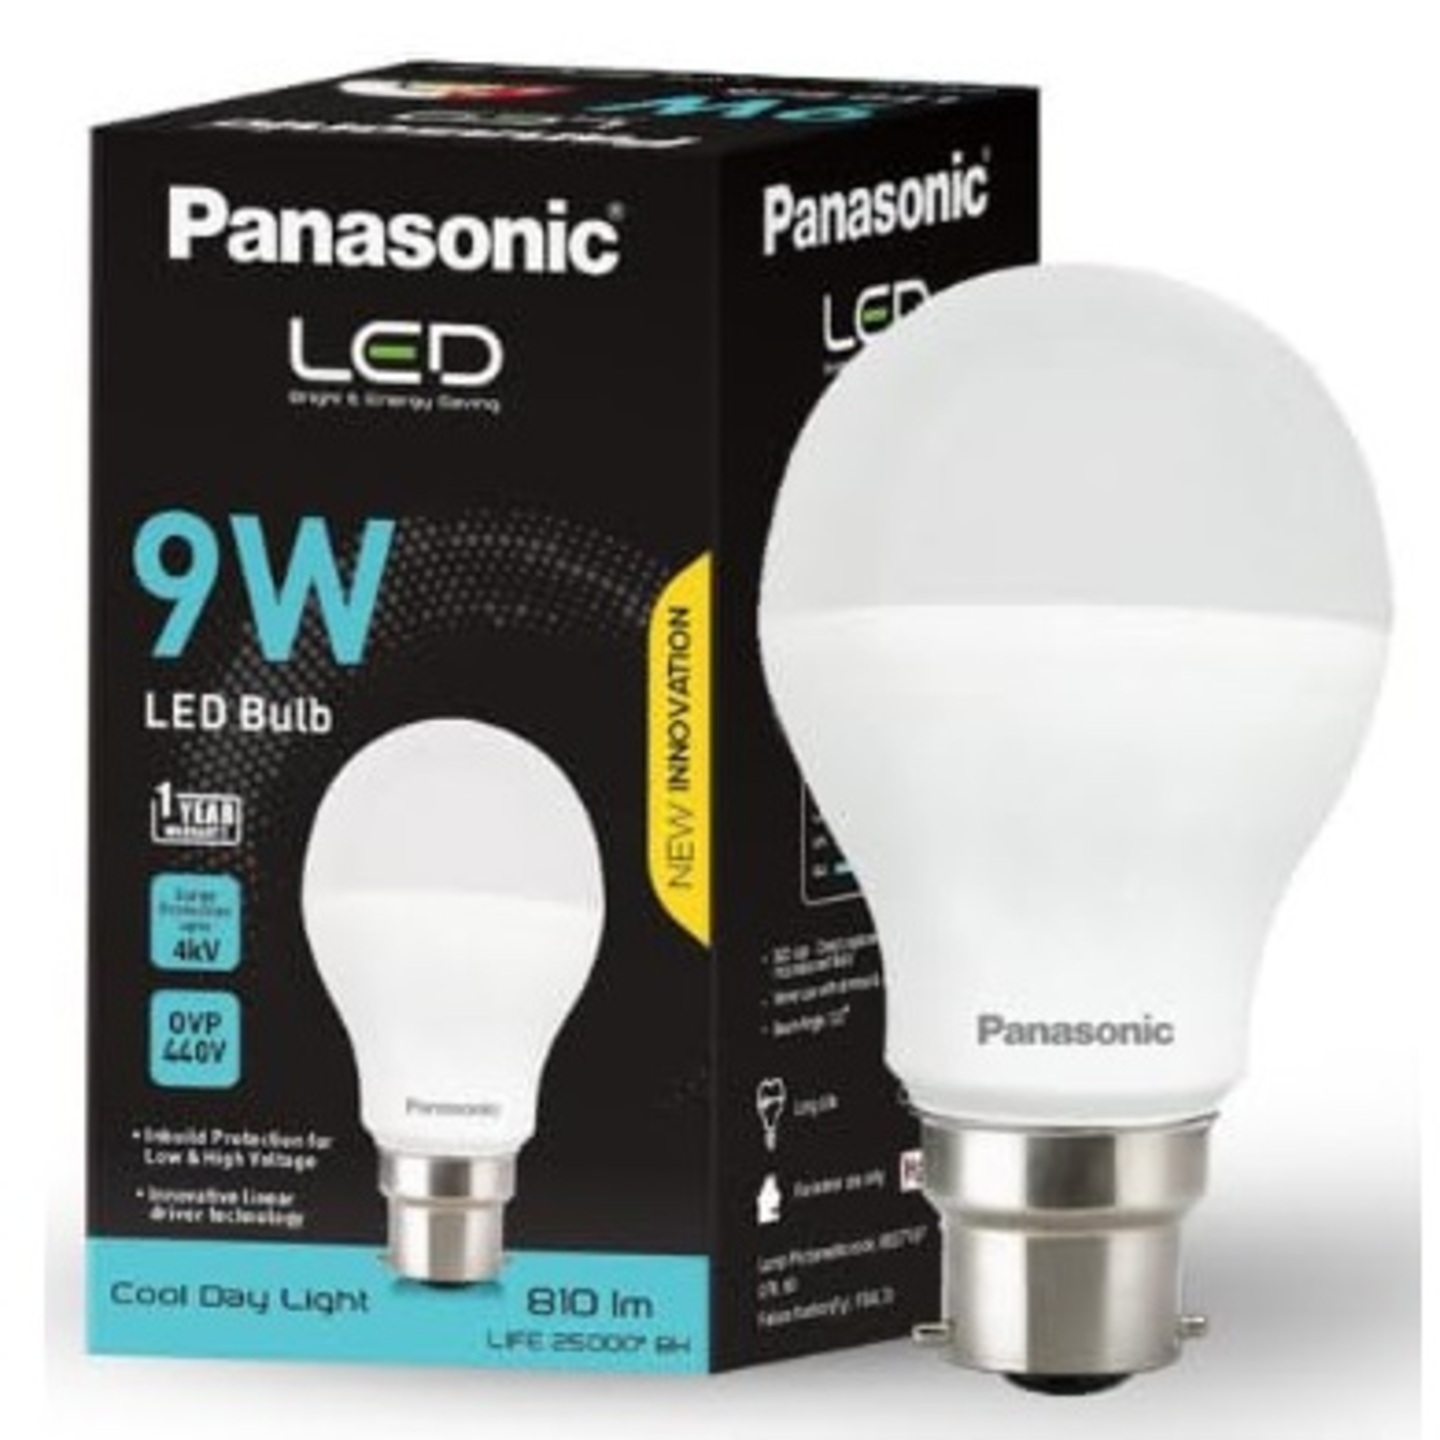 Panasonic 9W LED Bulb 4kV Surge Protection Cool Day Light - B22 Base